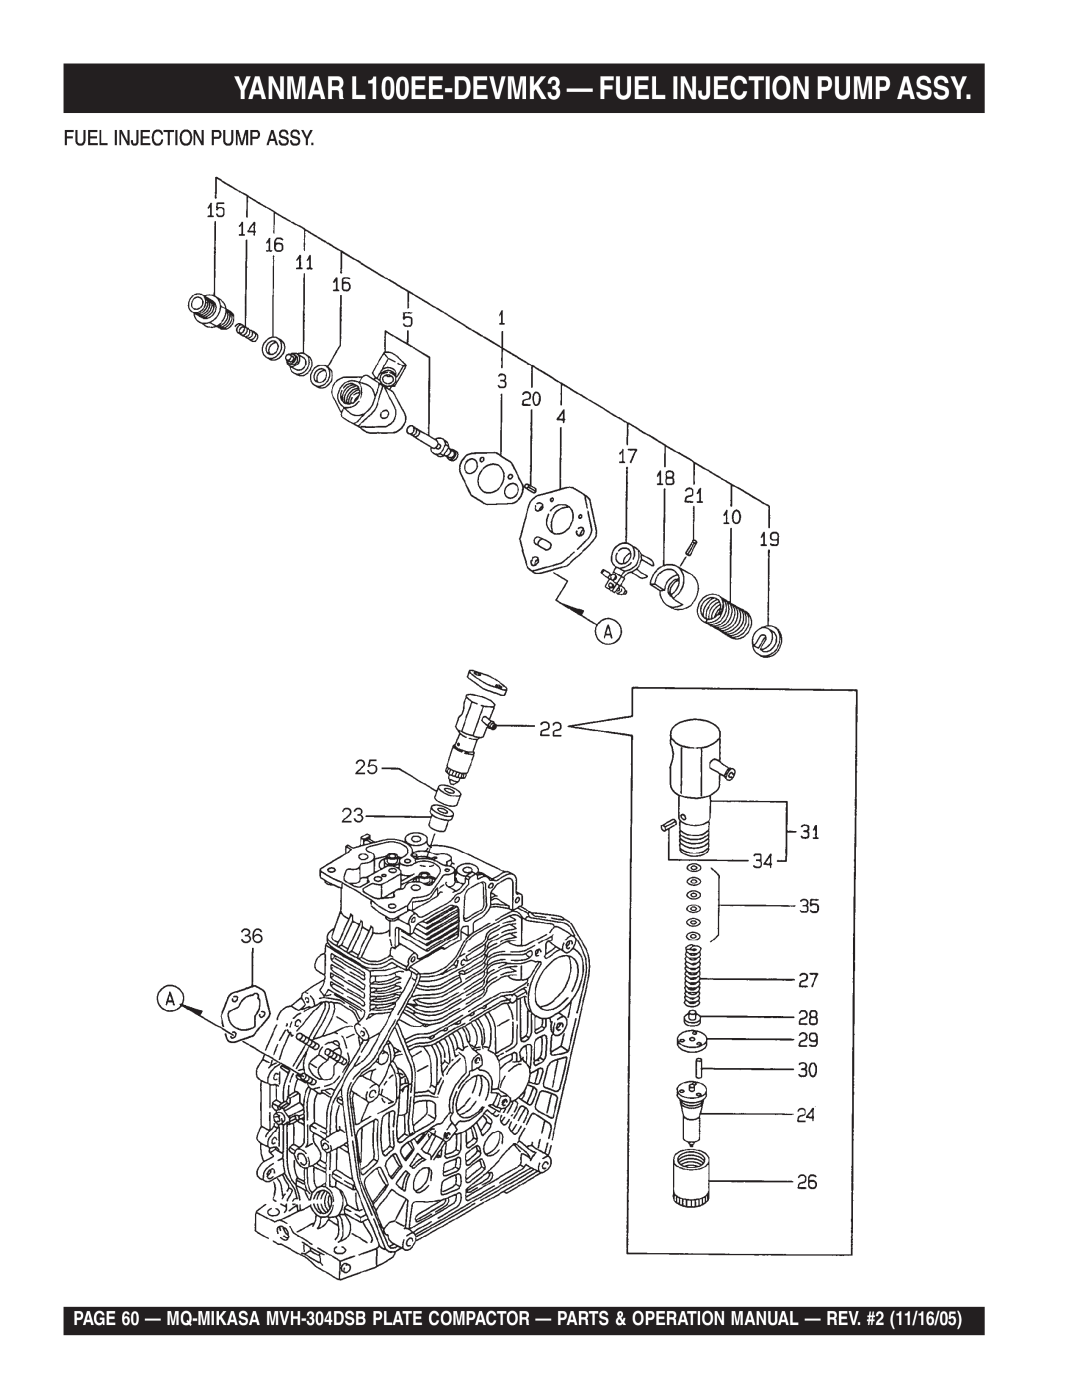 Multiquip MVH-304DSB operation manual YANMAR L100EE-DEVMK3 - FUEL INJECTION PUMP ASSY, Fuel Injection Pump Assy 